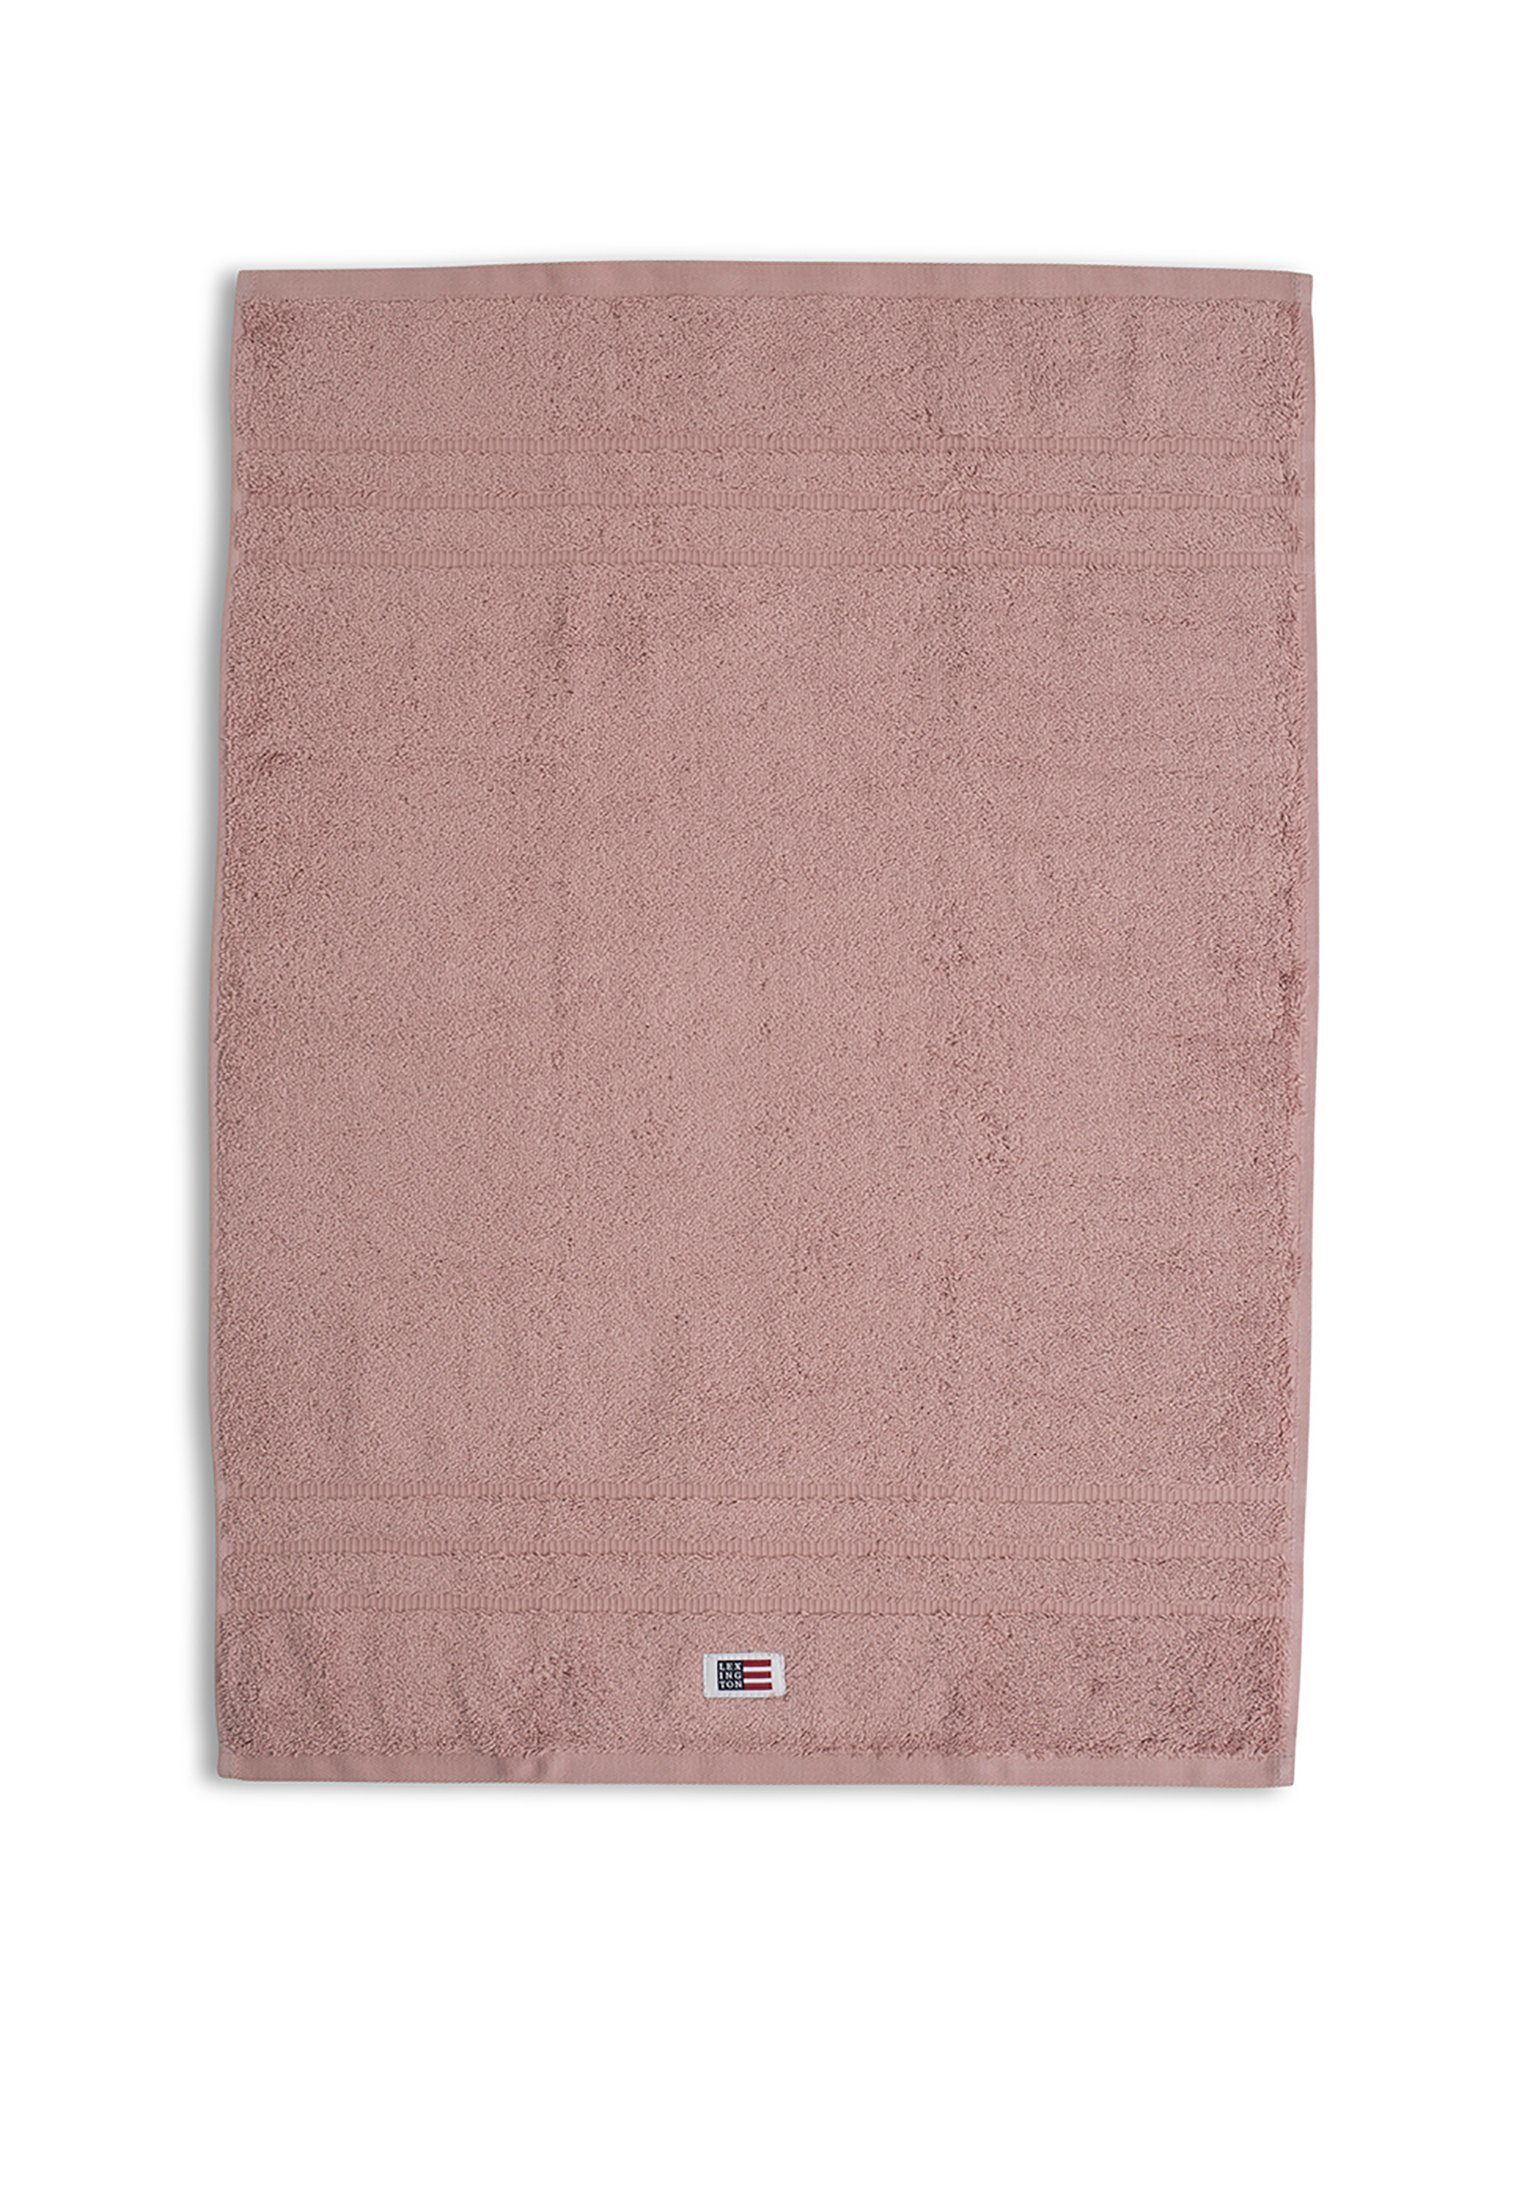 Lavender Towel Handtuch Original Lexington